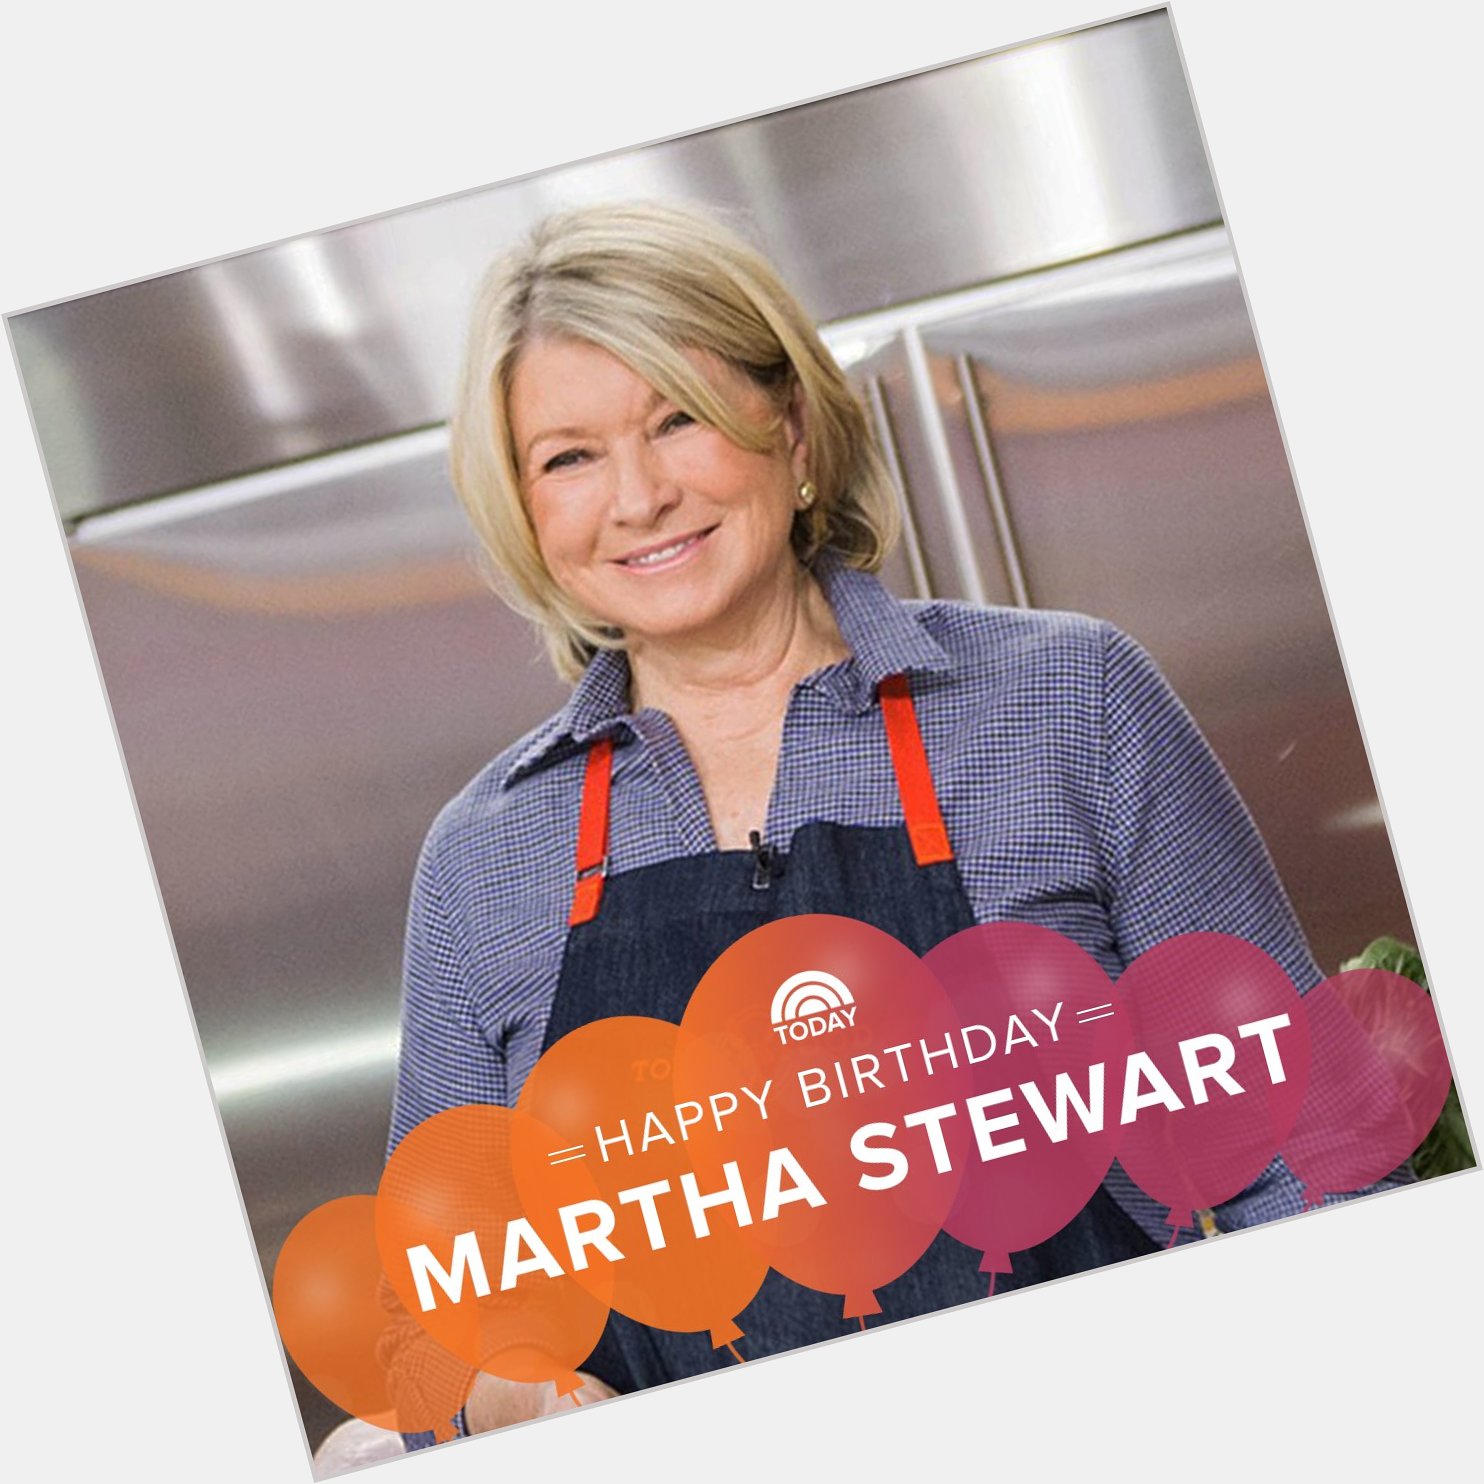 Happy birthday, Martha Stewart! 